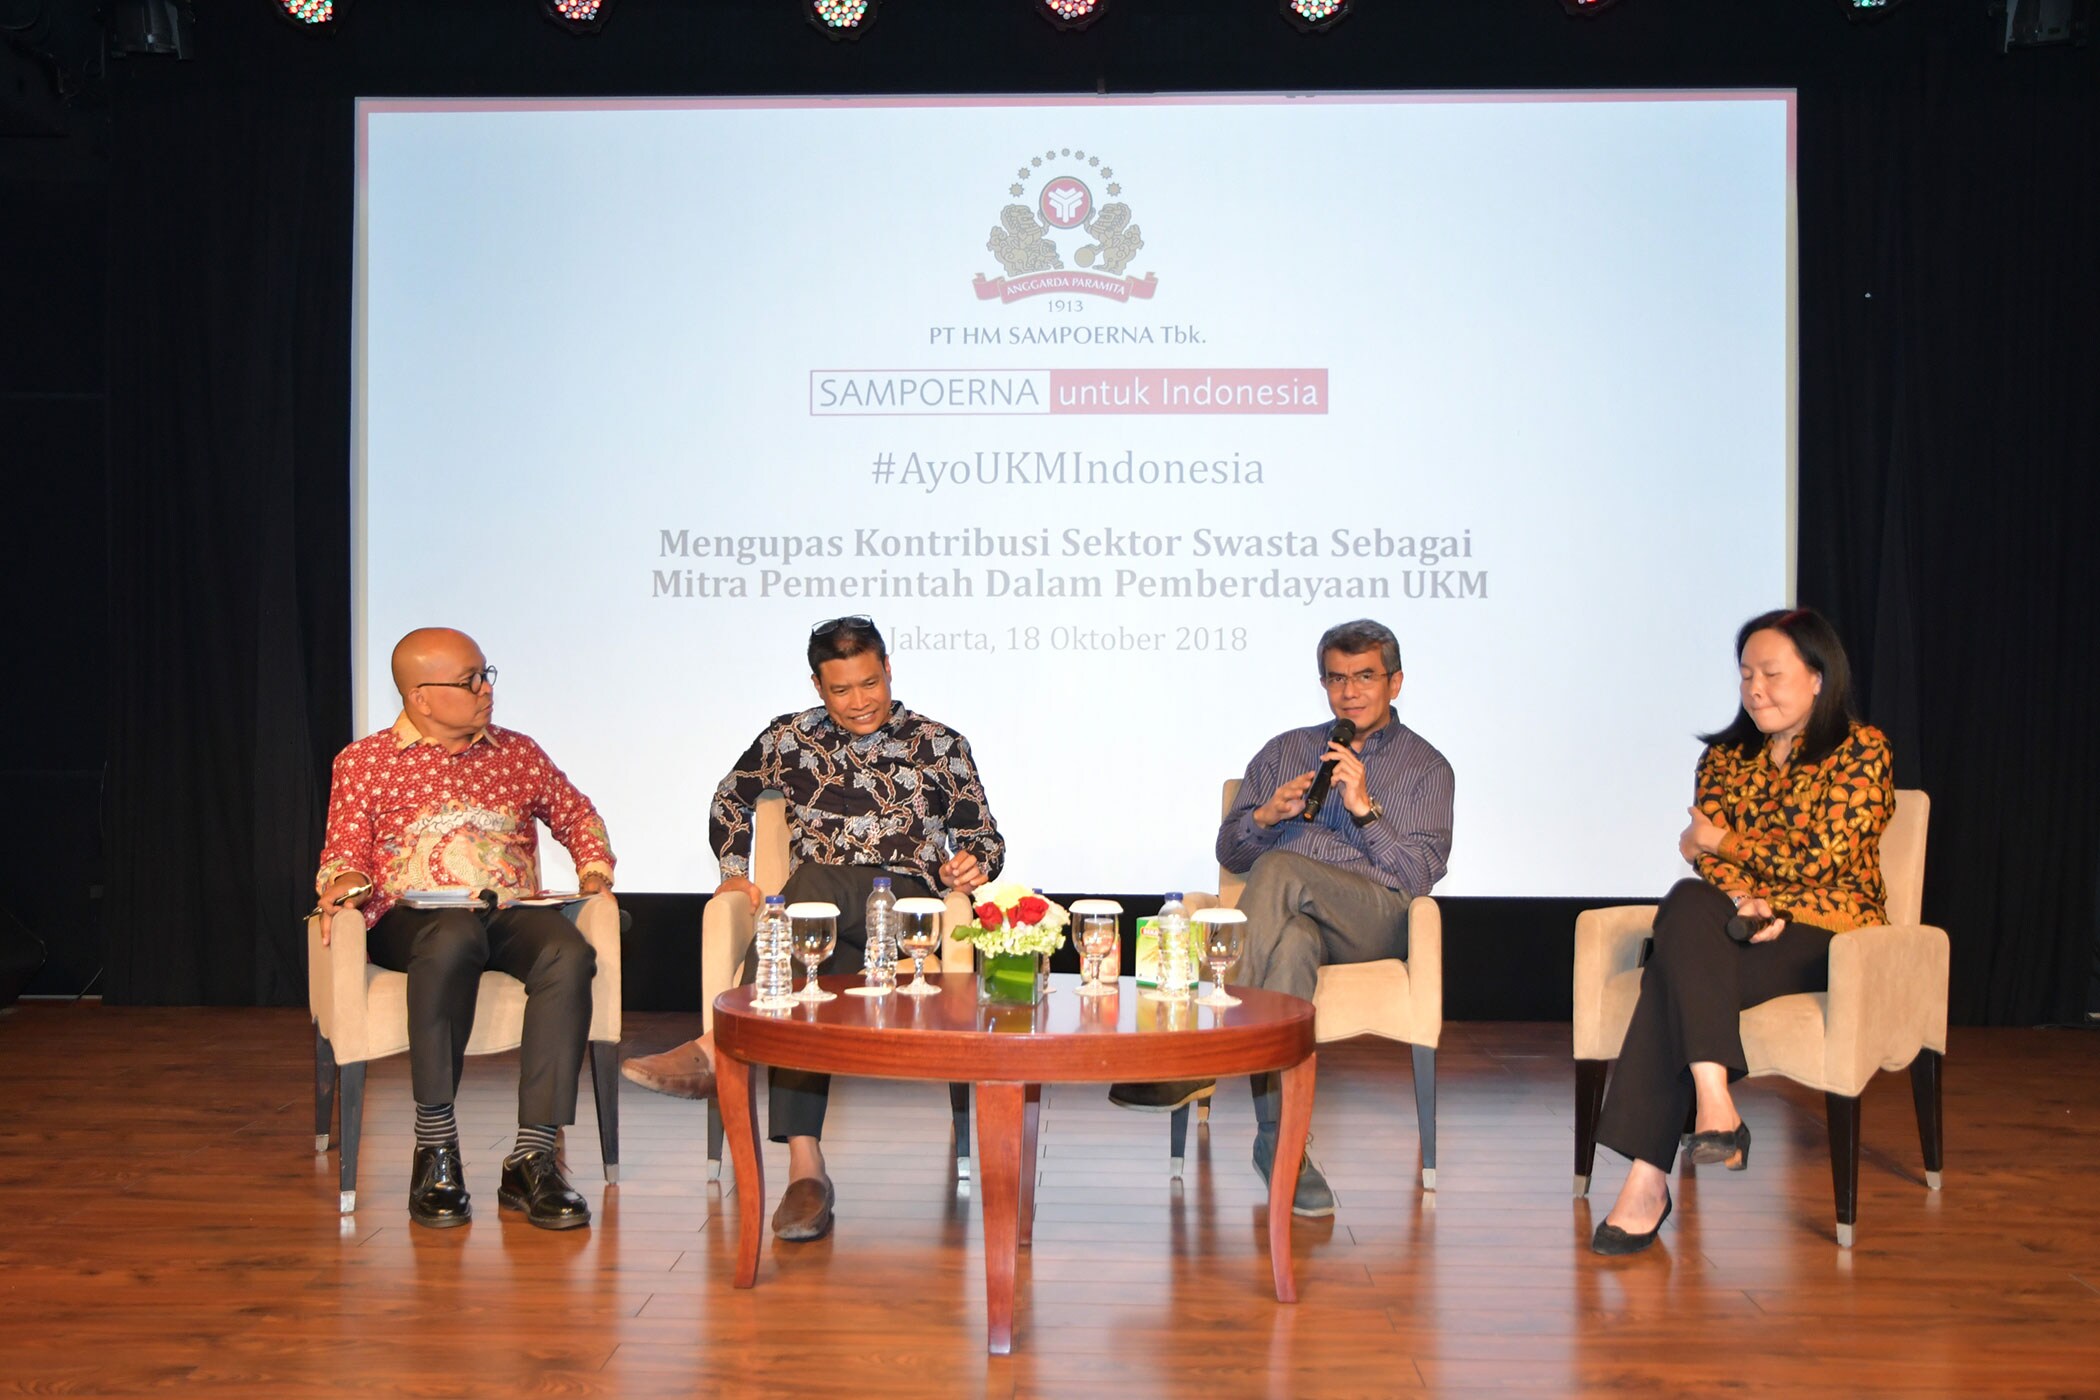 #AyoUKMIndonesia: Sampoerna Promotes SME Empowerment in Indonesia